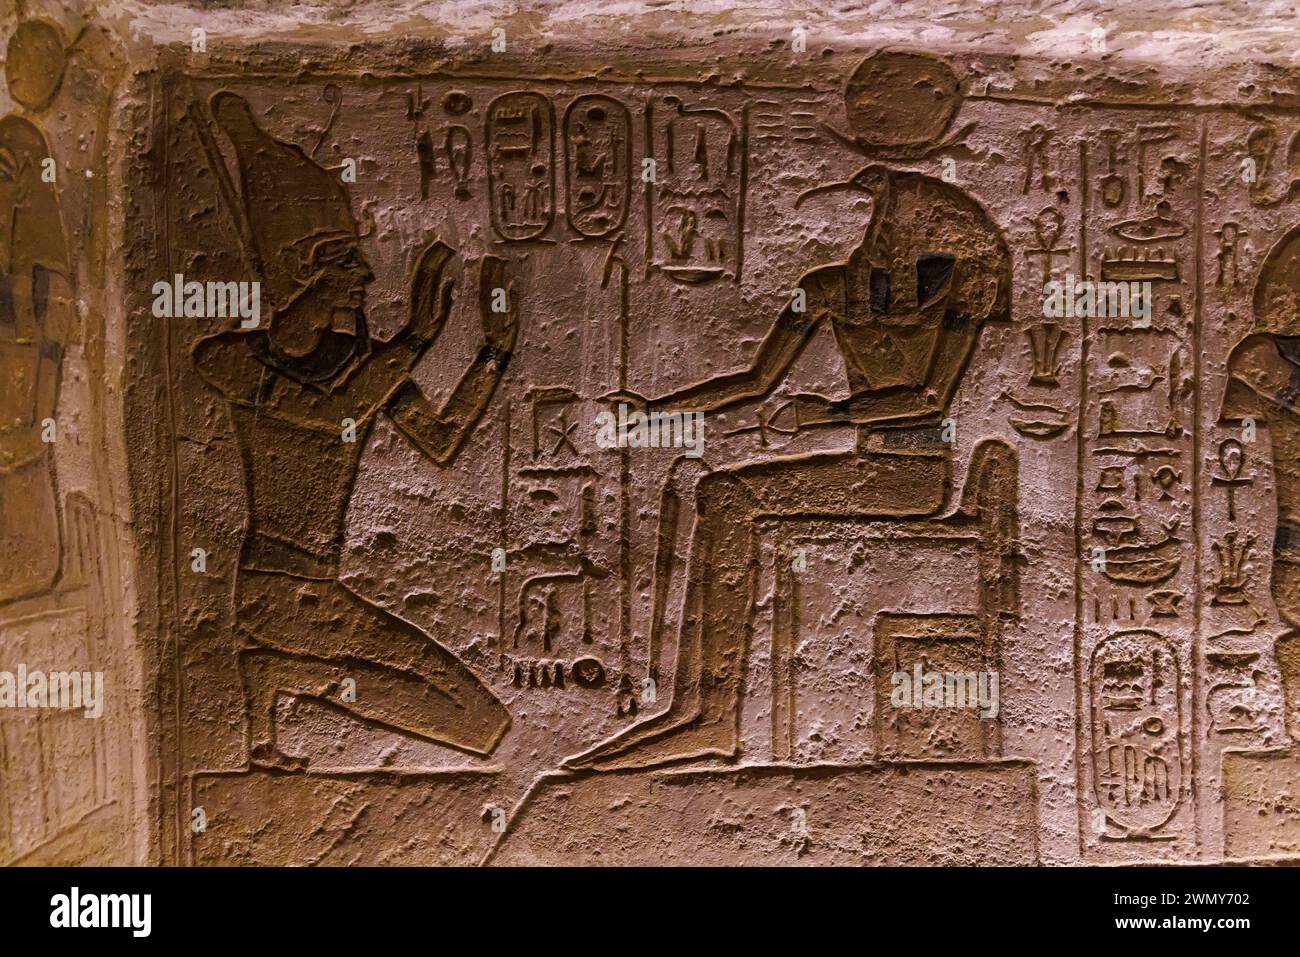 Egitto, Abu Simbel, monumenti nubiani da Abu Simbel a file, patrimonio mondiale dell'UNESCO, tempio Ramses II, Ramses II e Thot Foto Stock